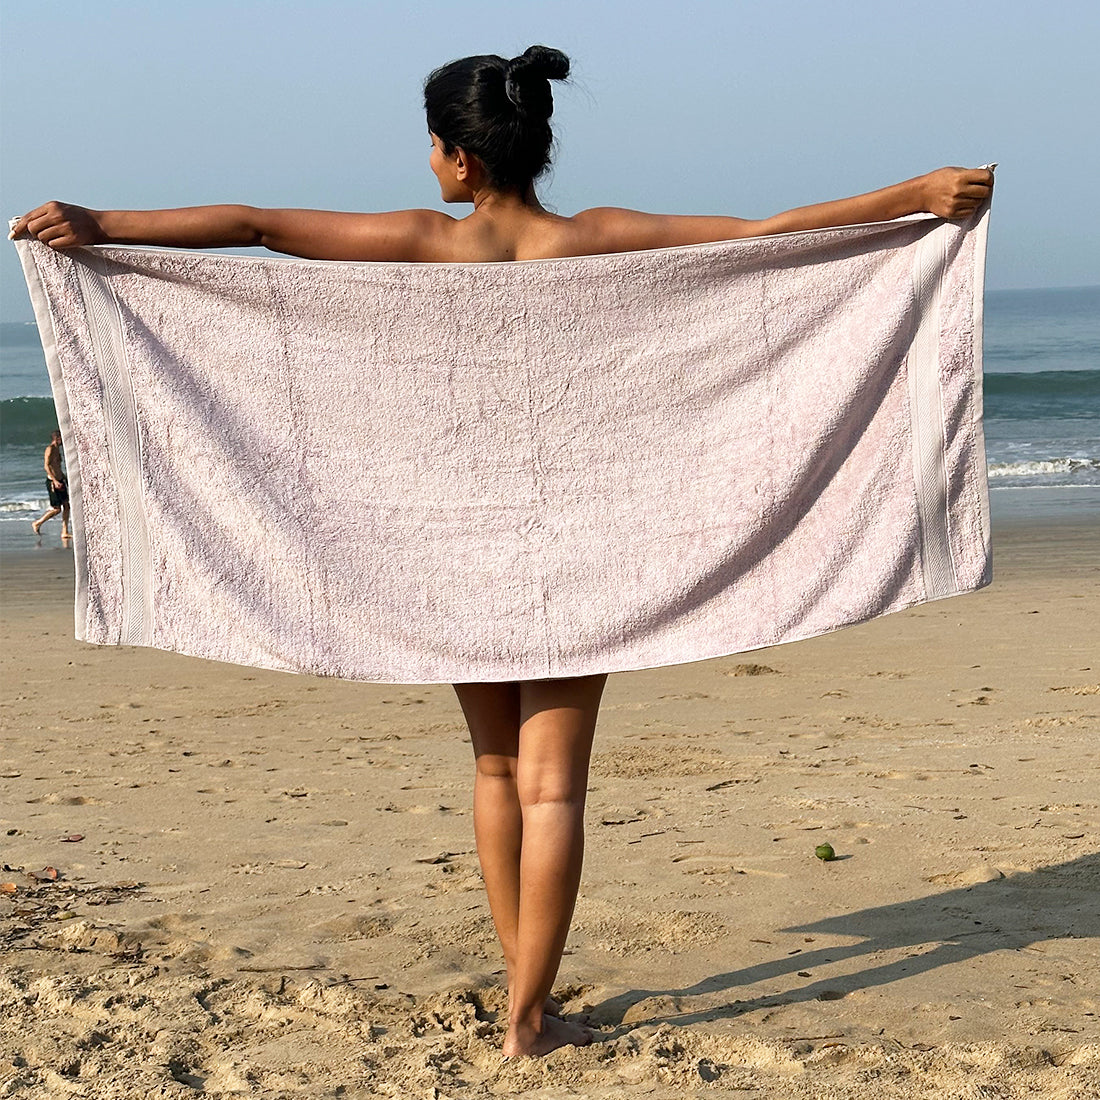 Furbo 100% Bamboo Bath Towel Ultra Absorbent, Soft Feel, Quick Drying & Antibacterial, 600 GSM, 138 cm x 75 cm (Grape Pink)